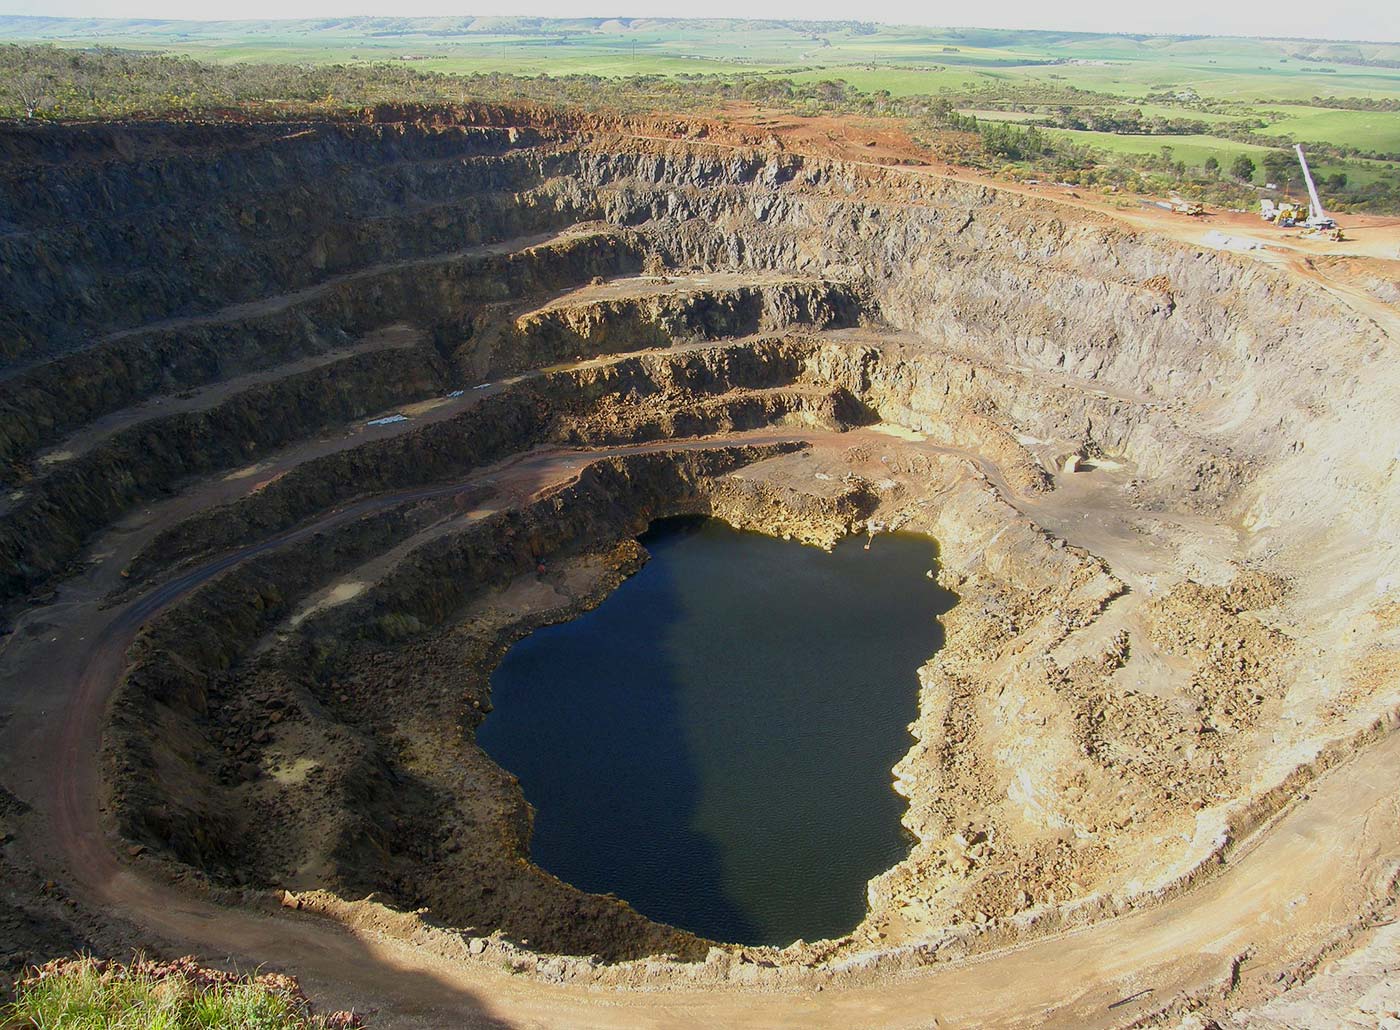 An open pit copper mine in Australia